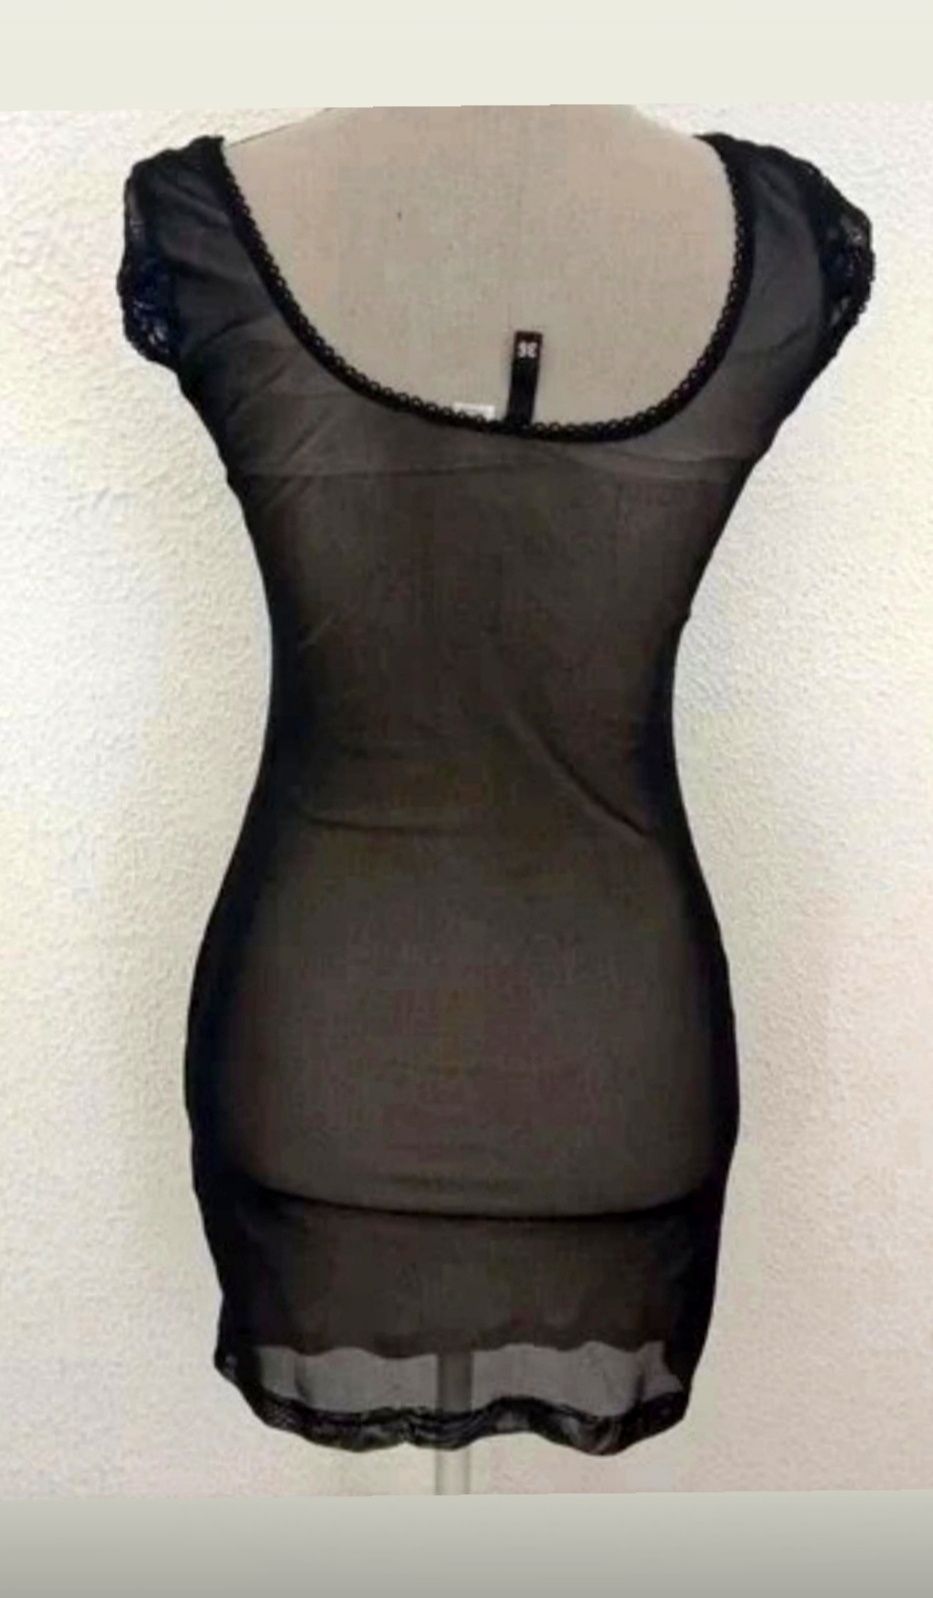 Sukienka koronkowa czarna H&M very sexy

Koronkowa czarna sukienka ver